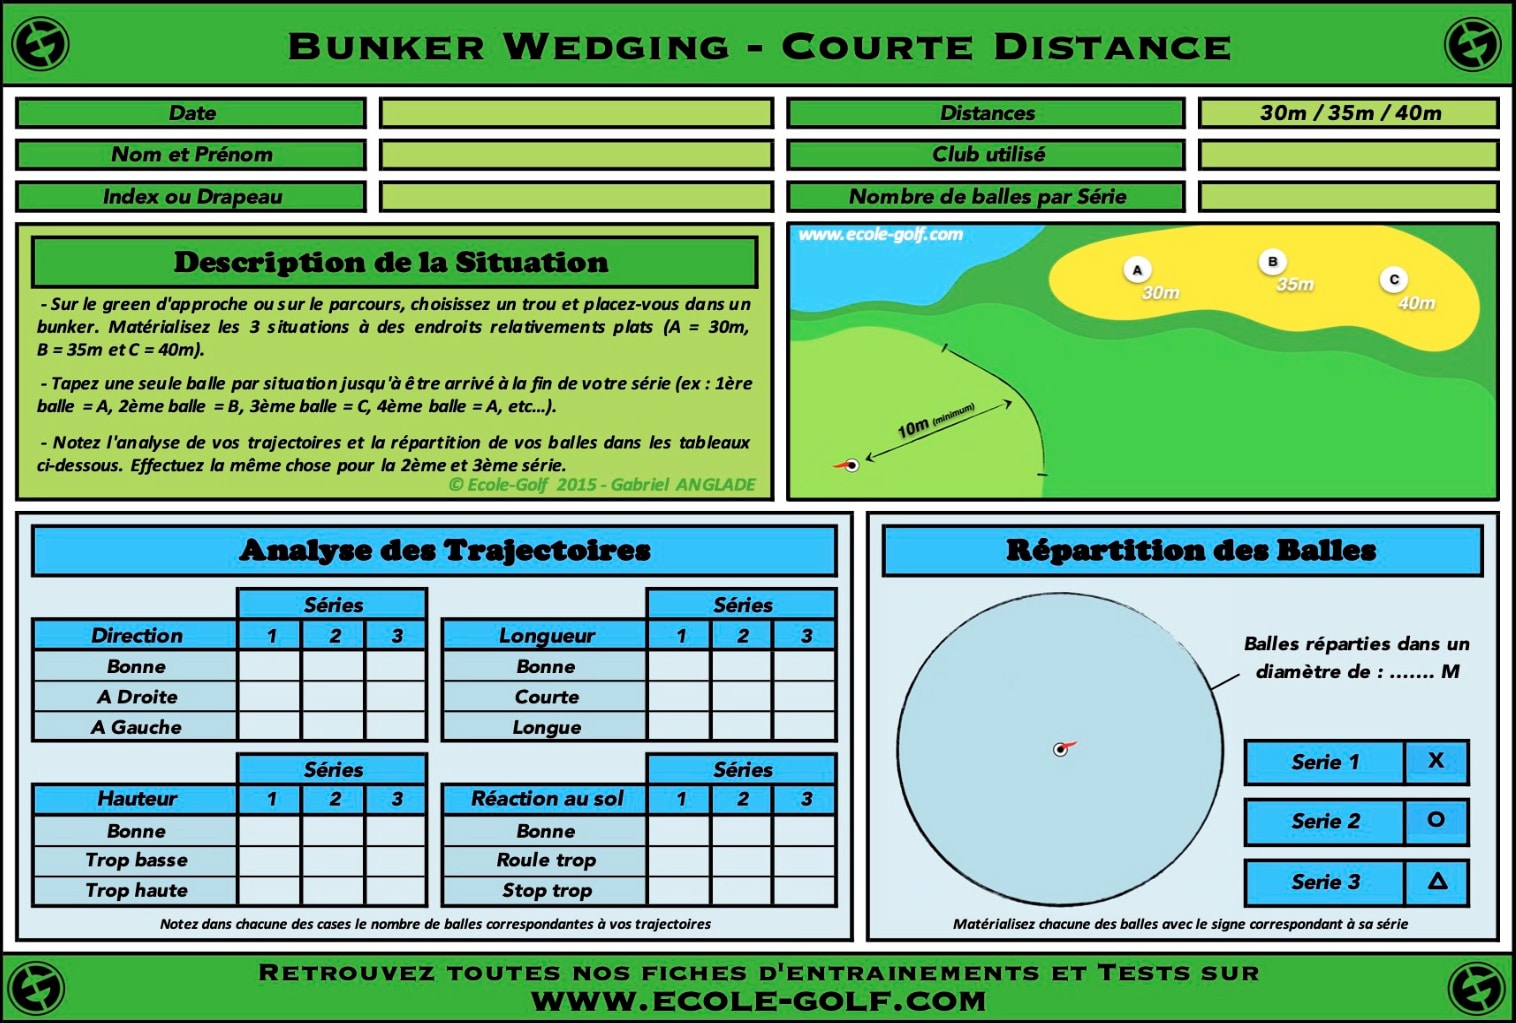 Bunker Wedging - Courte Distance